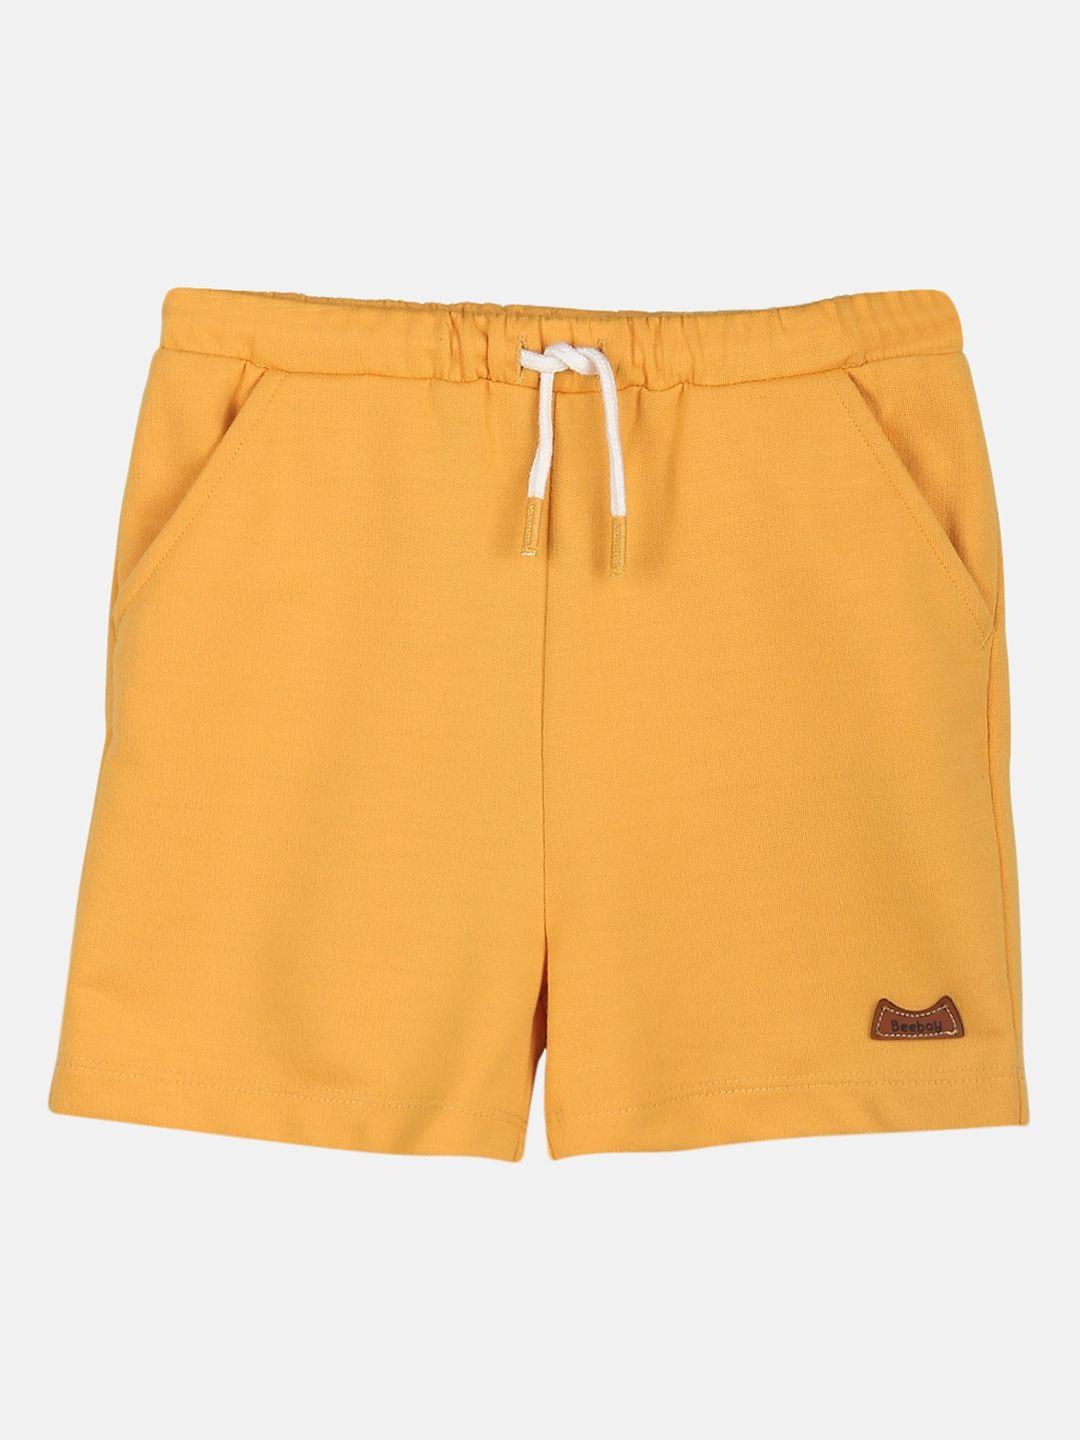 beebay boys mustard yellow cotton shorts